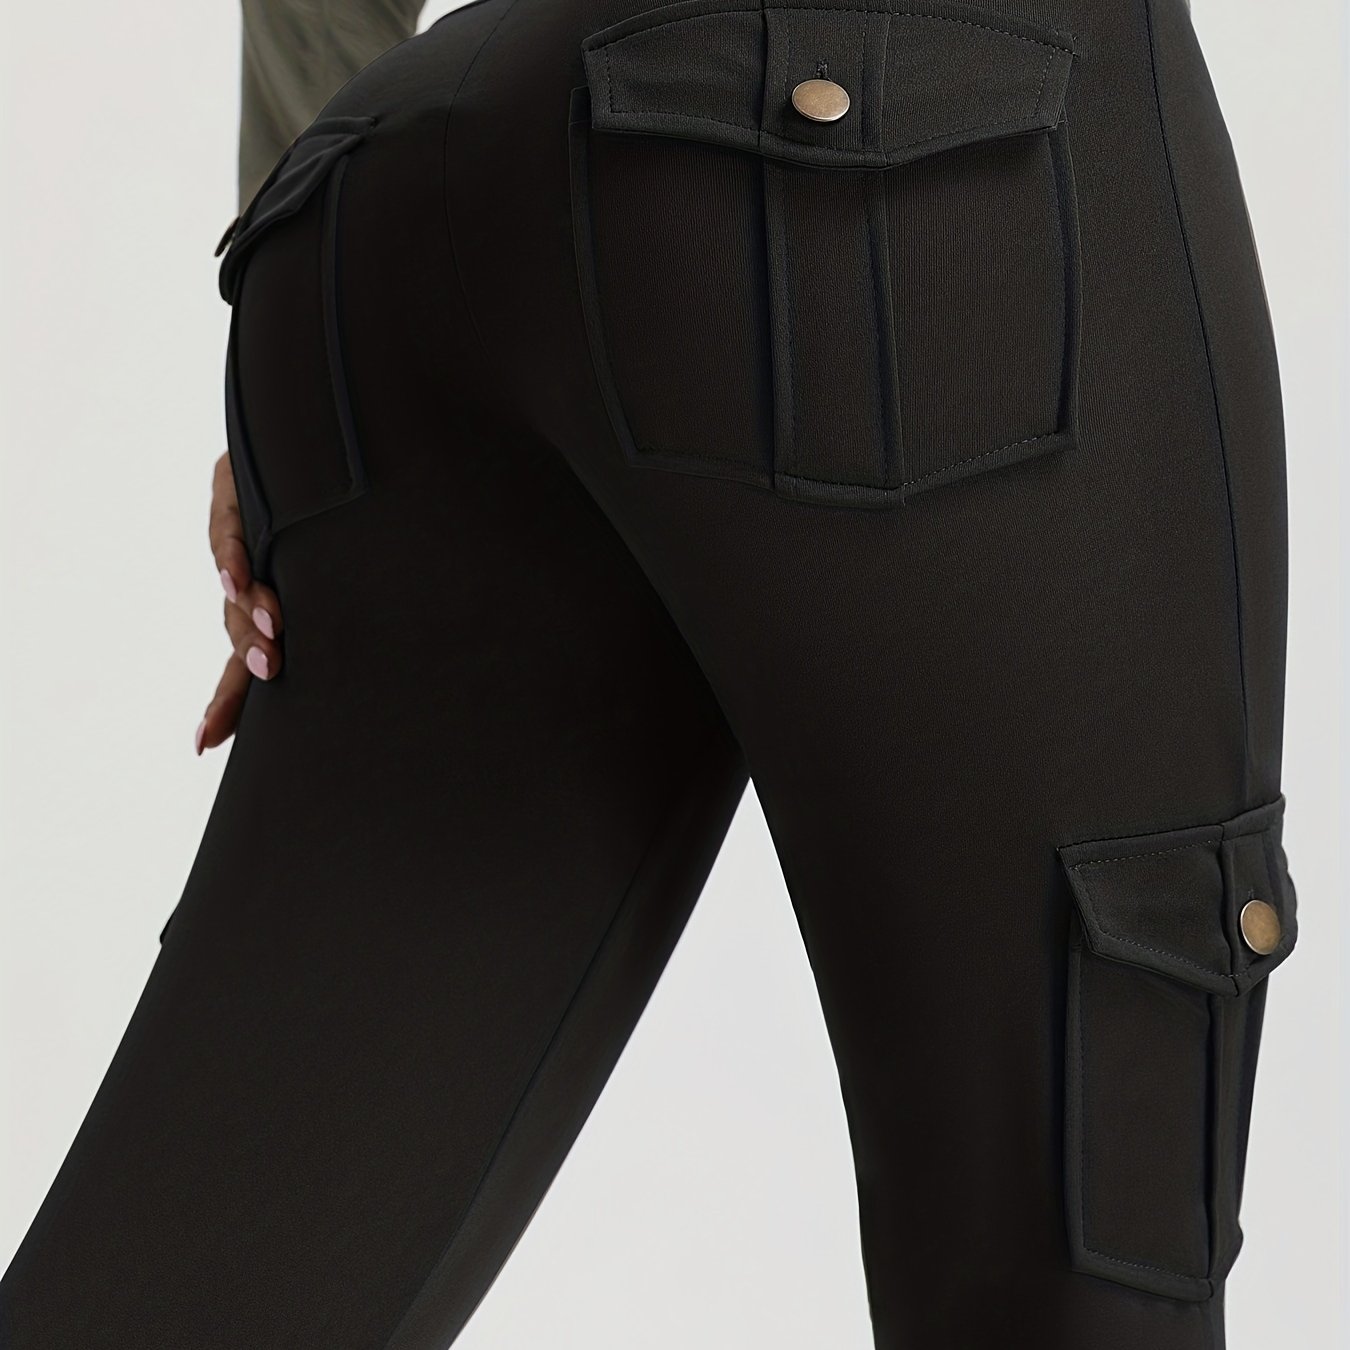 TIHLMK Cargo Pants Women Sales Clearance Casual Printed Tight Leggings High  Waist Long Pants 